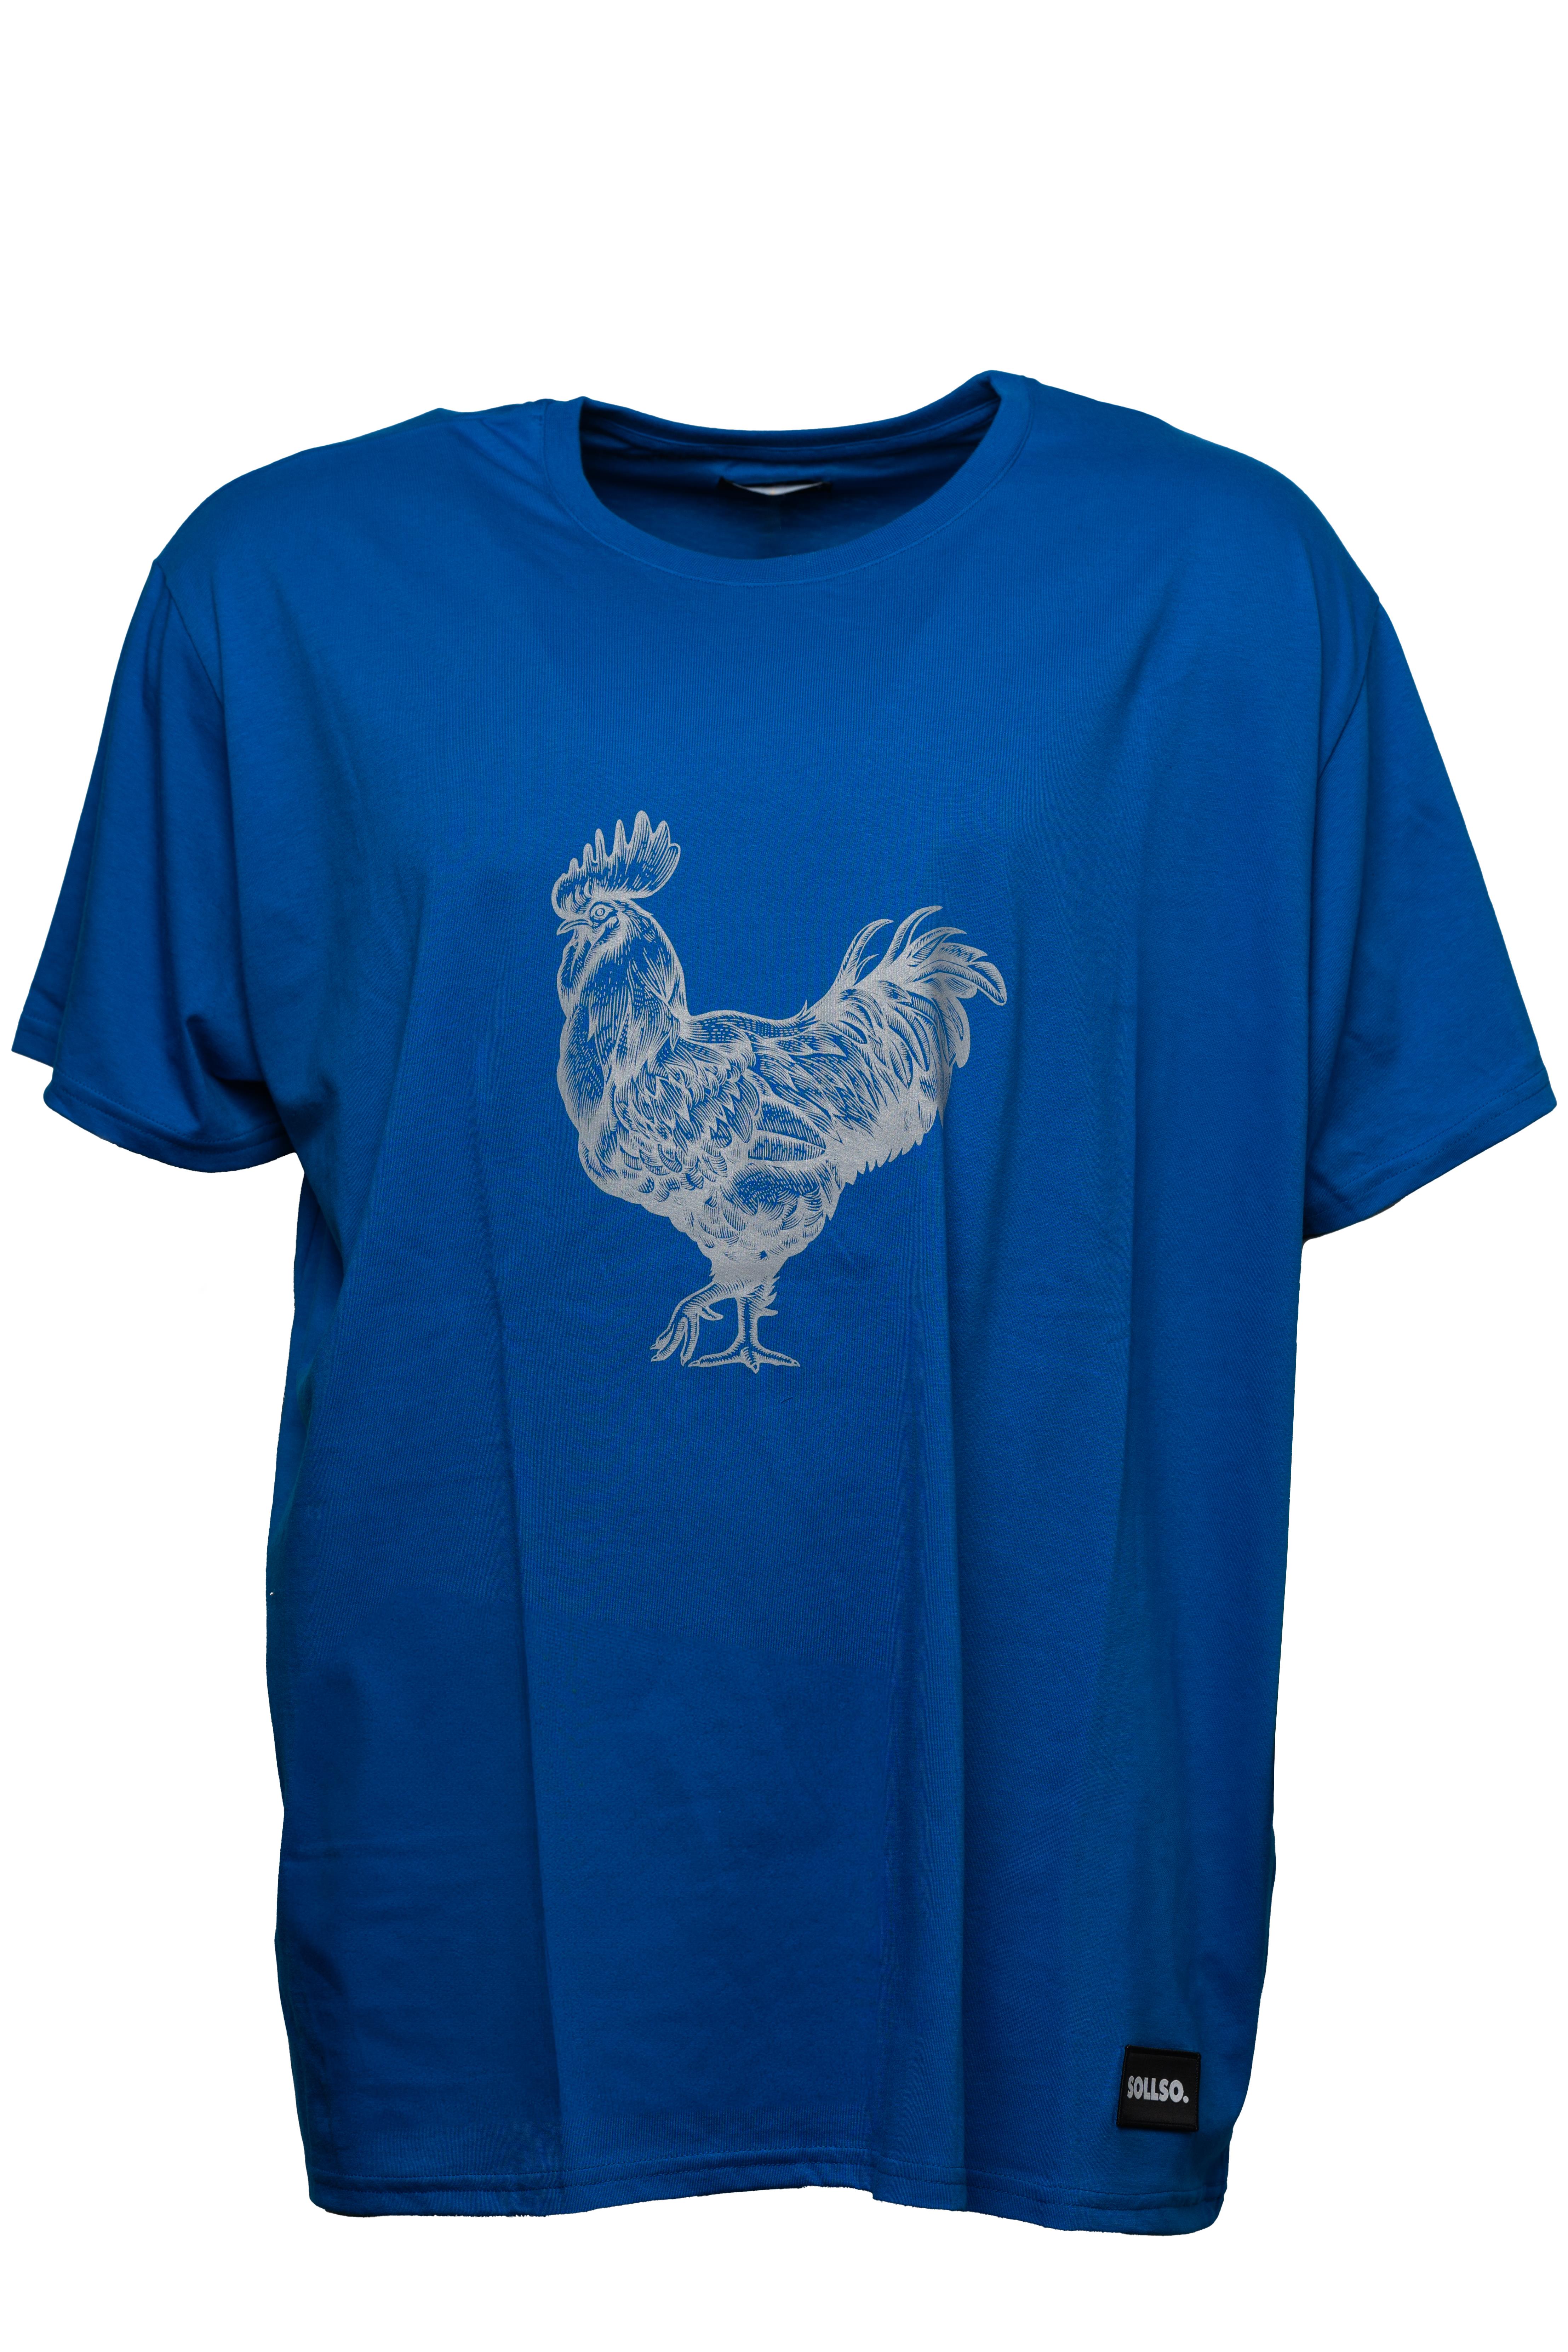 SOLLSO. T-Shirt "Rooster", Farbe Ocean Blue, Größe 6XL